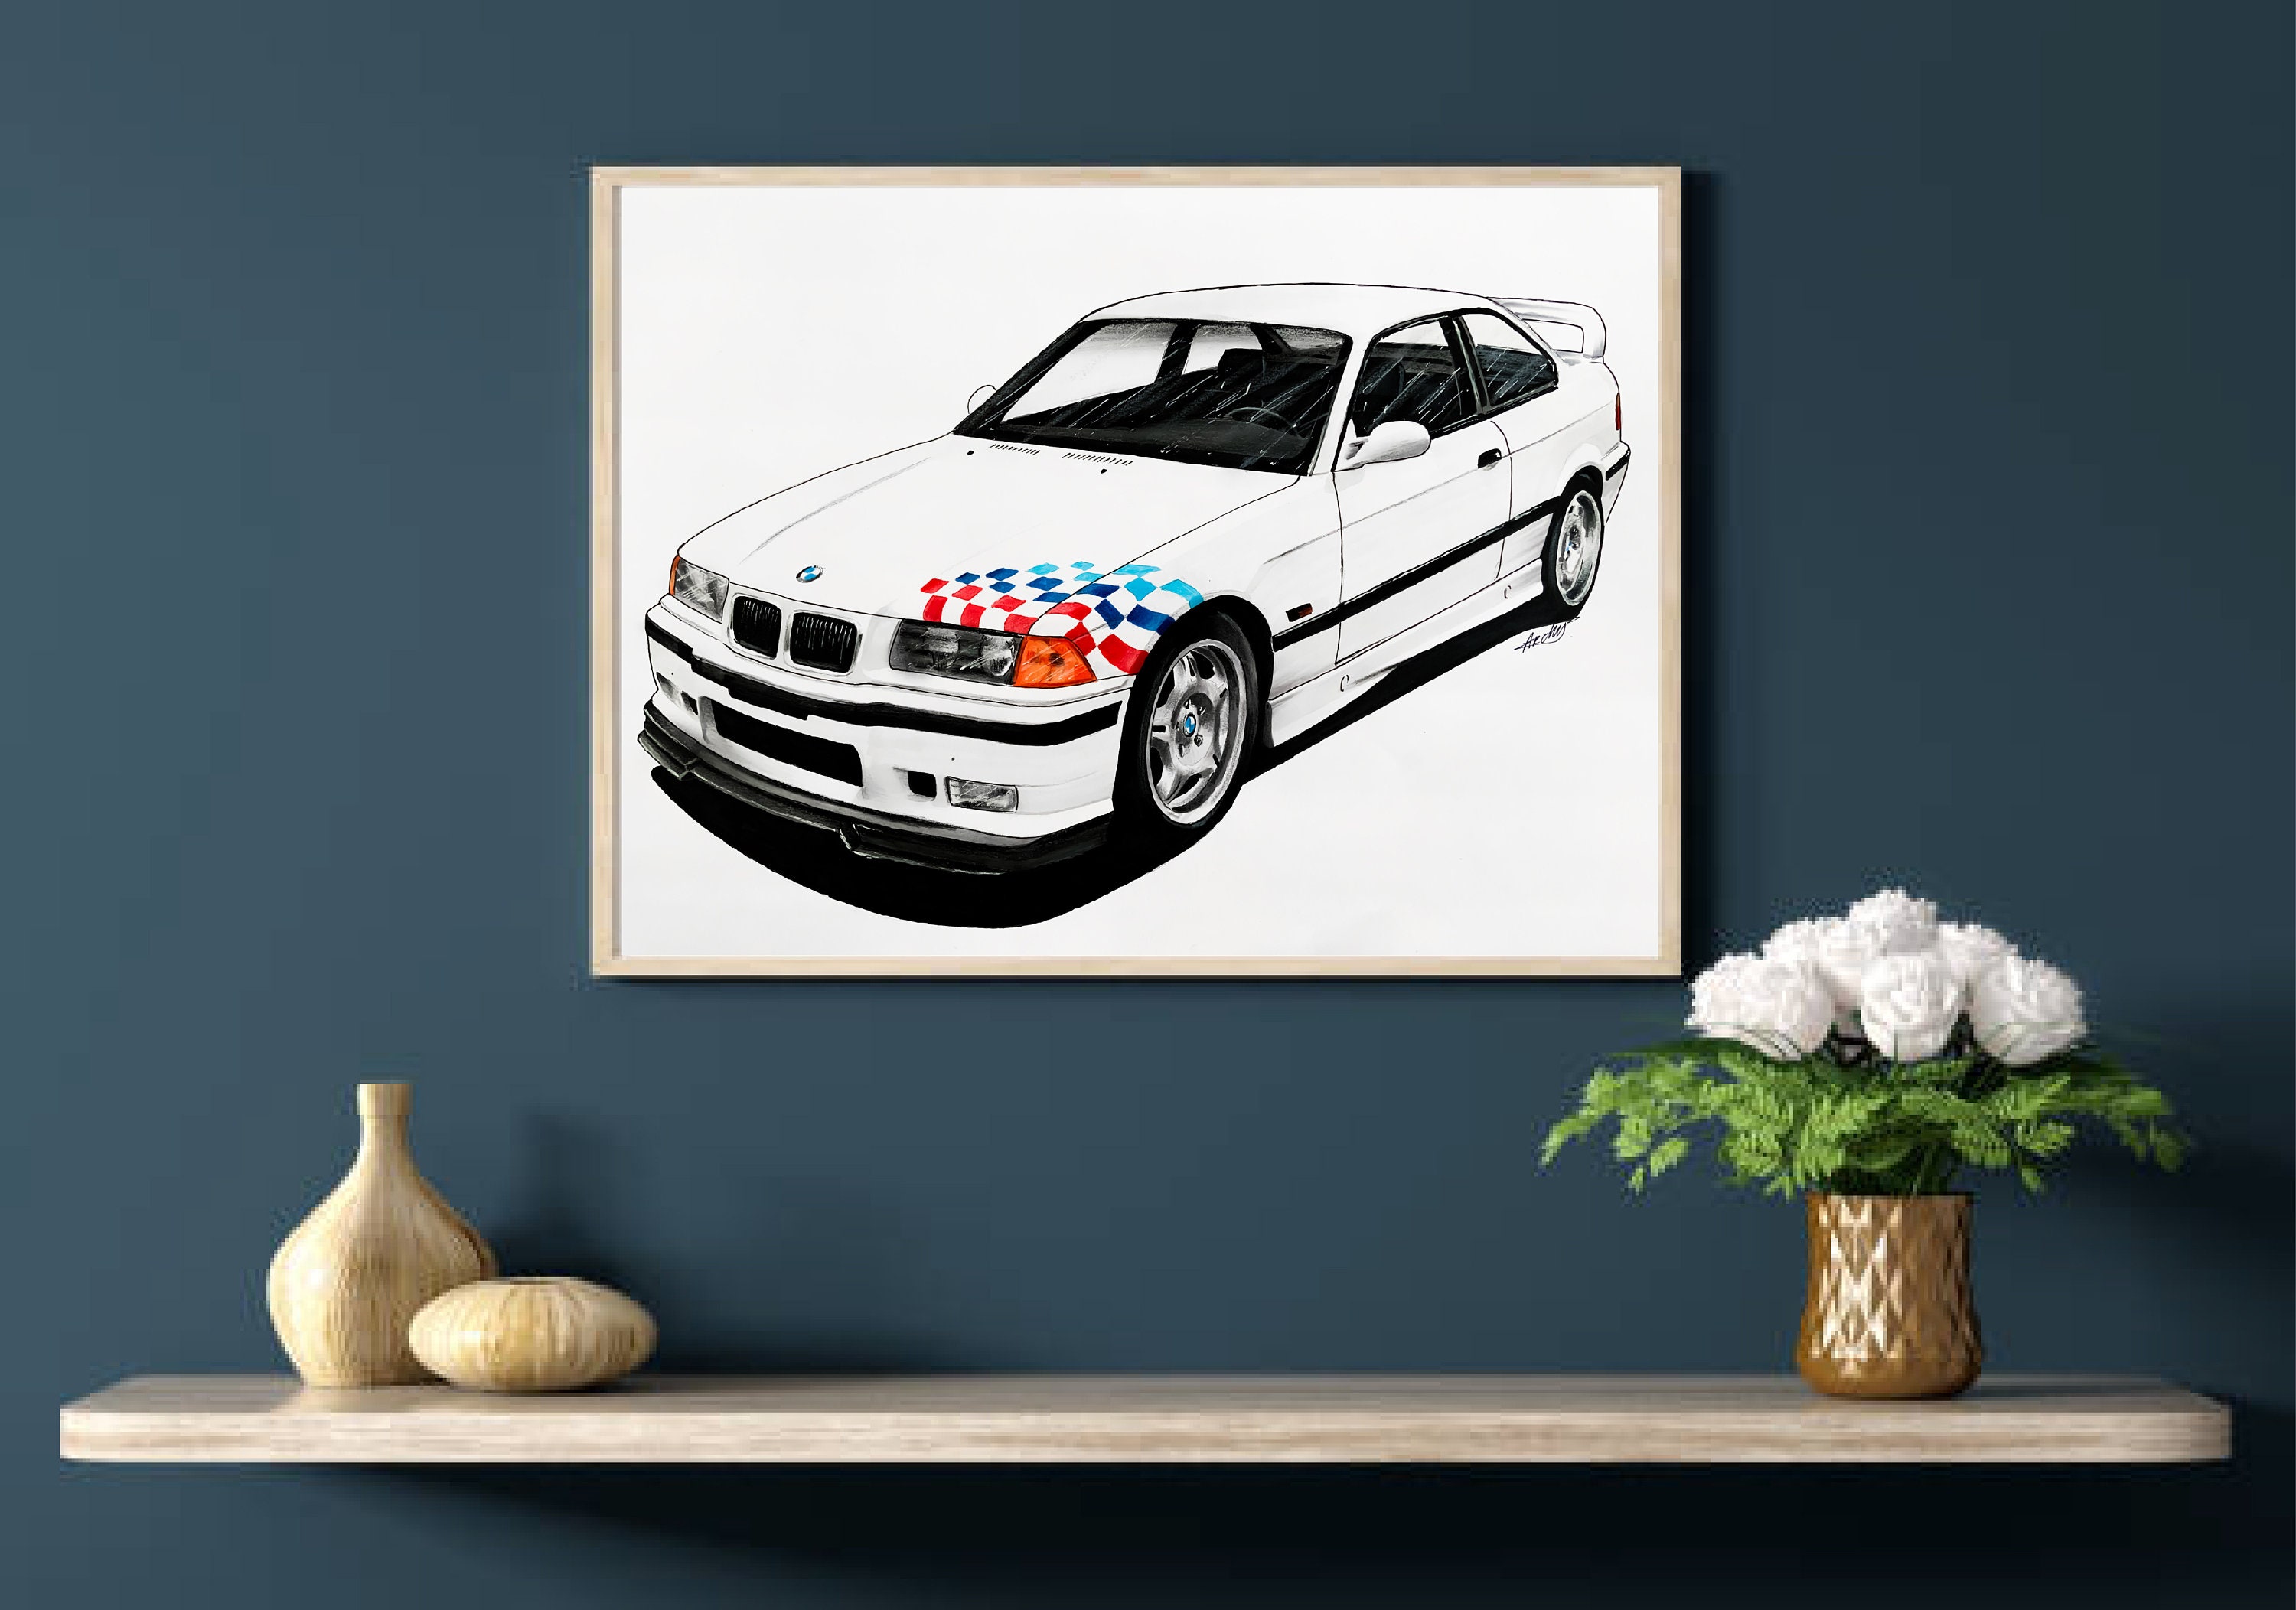 E36 BMW M3 - BMW M3 - BMW - M3 - Bmw Art - Bmw Poster - Bmw Gifts - Bmw  Prints - Car Poster - Racing Acrylic Print by Yurdaer Bes - Fine Art America